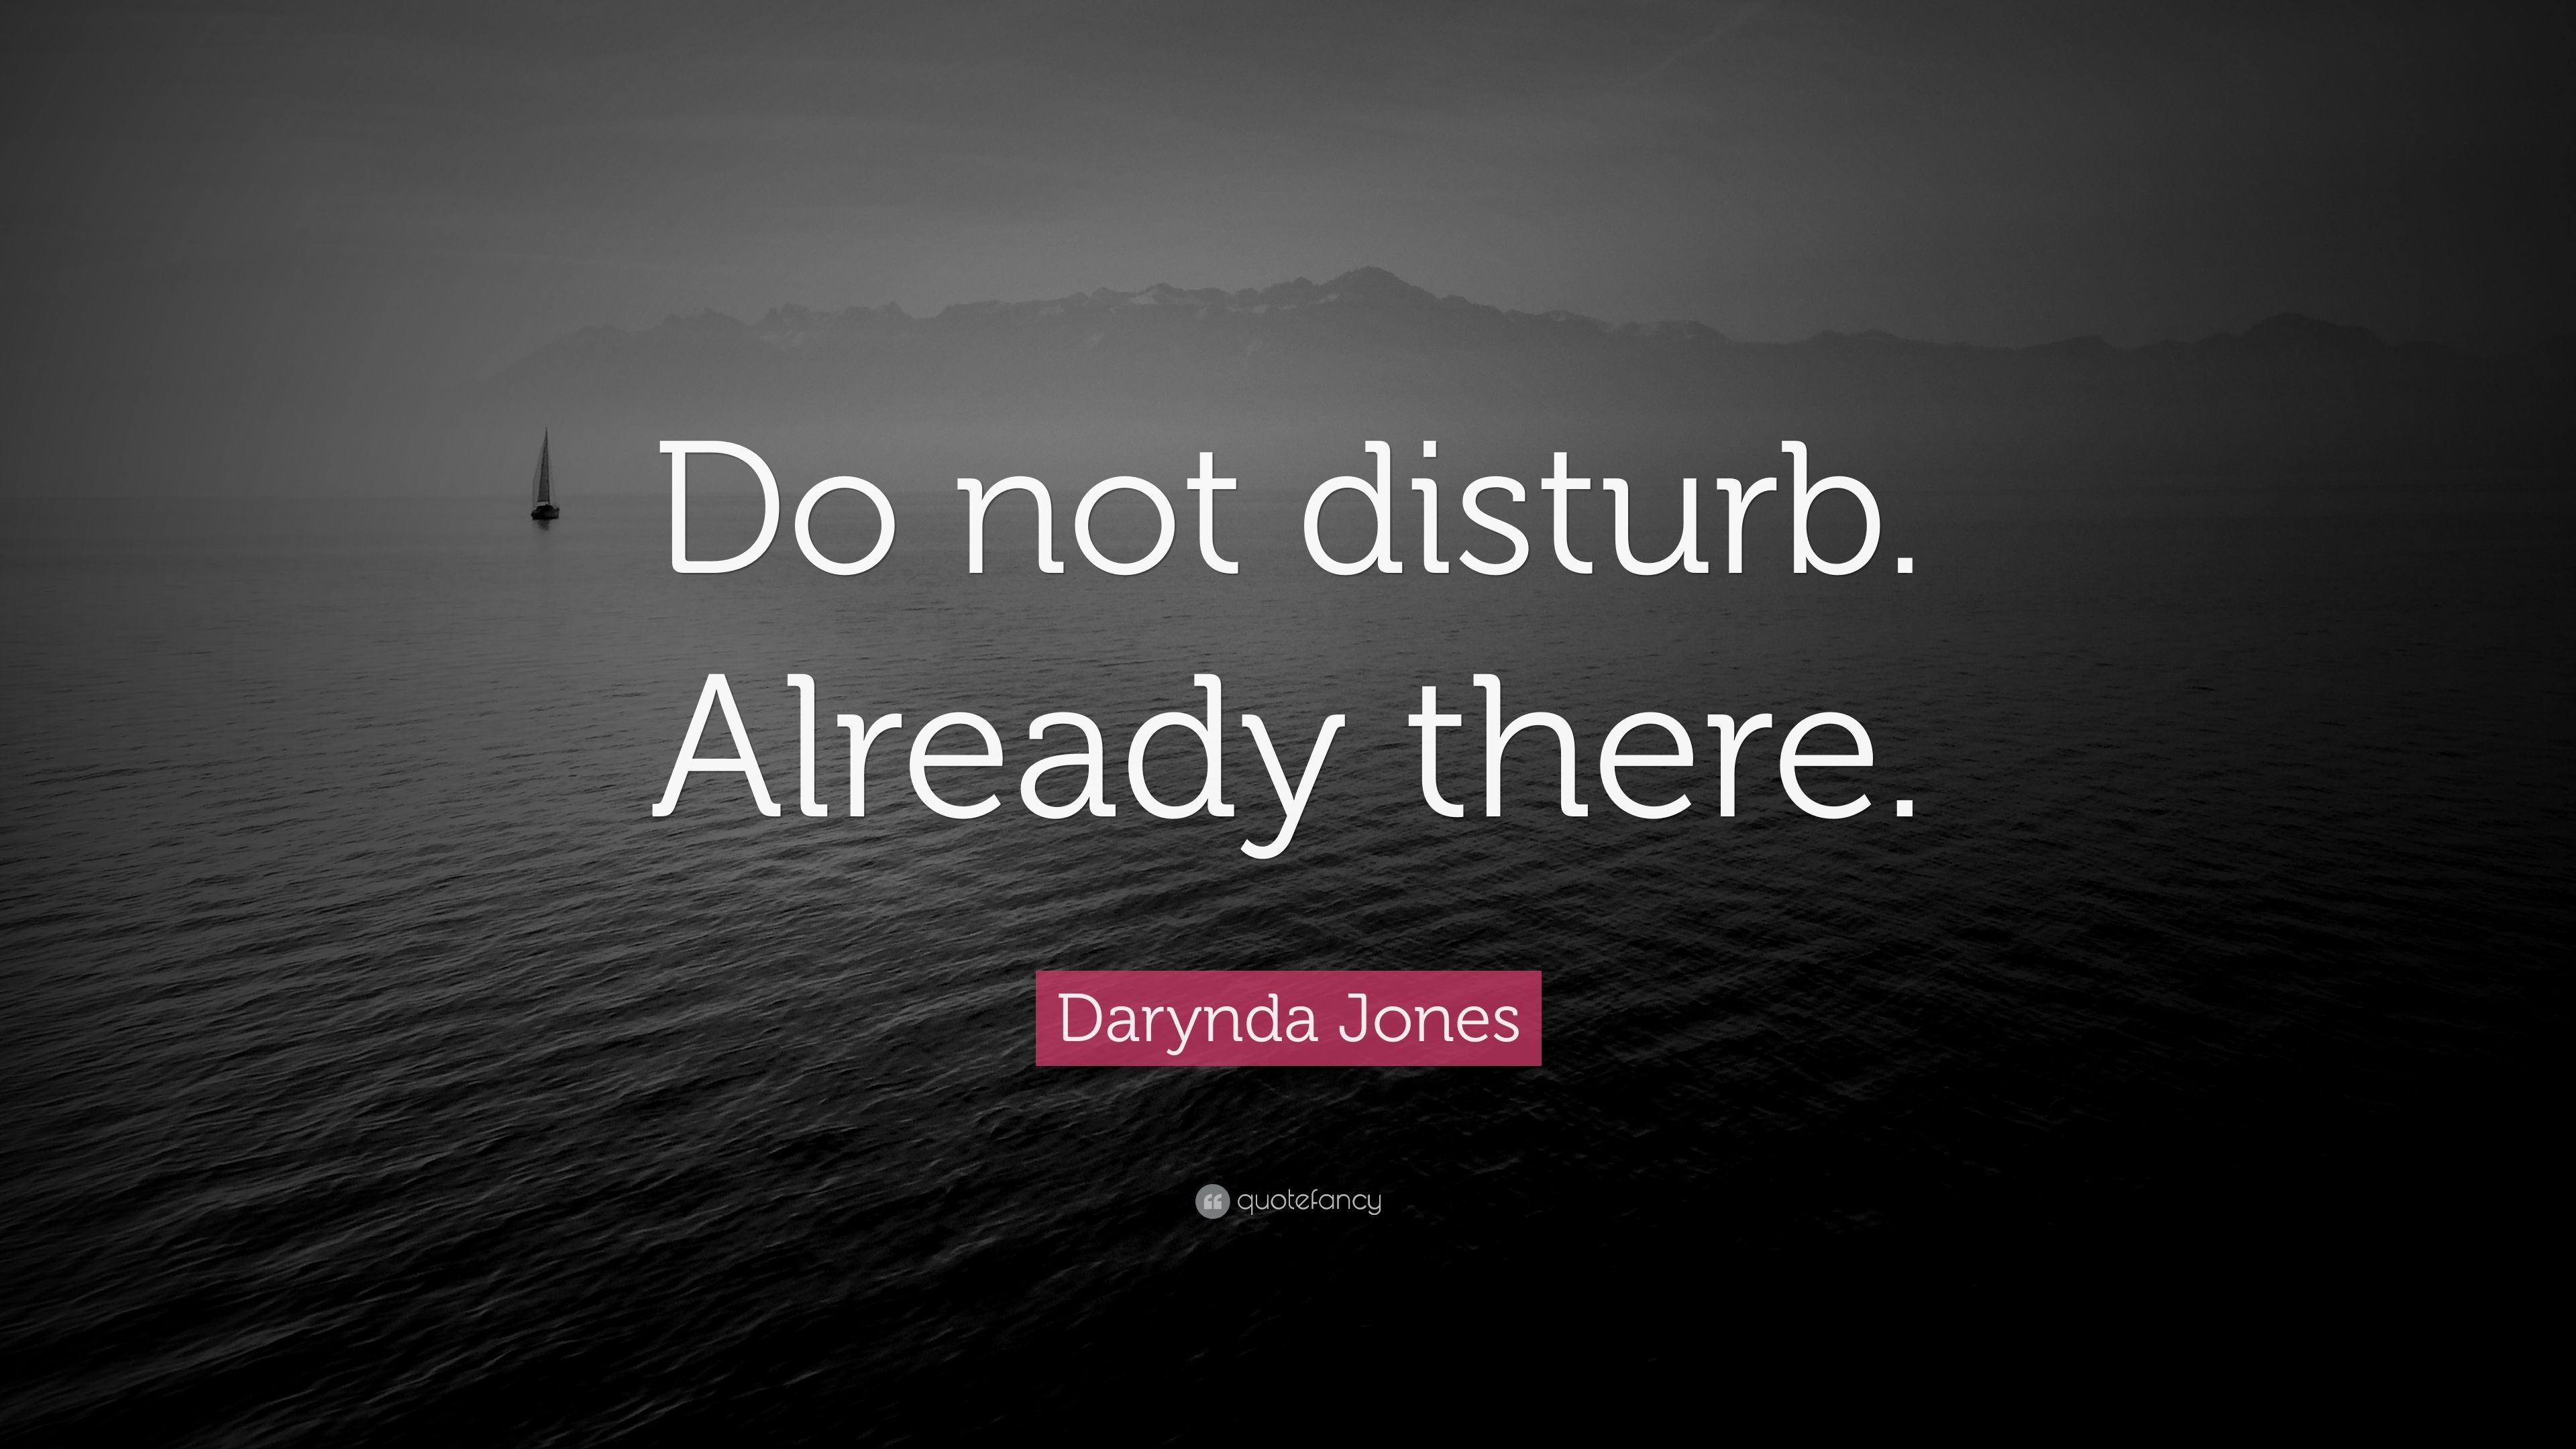 Darynda Jones Quote: “Do not disturb. Already there.” 7